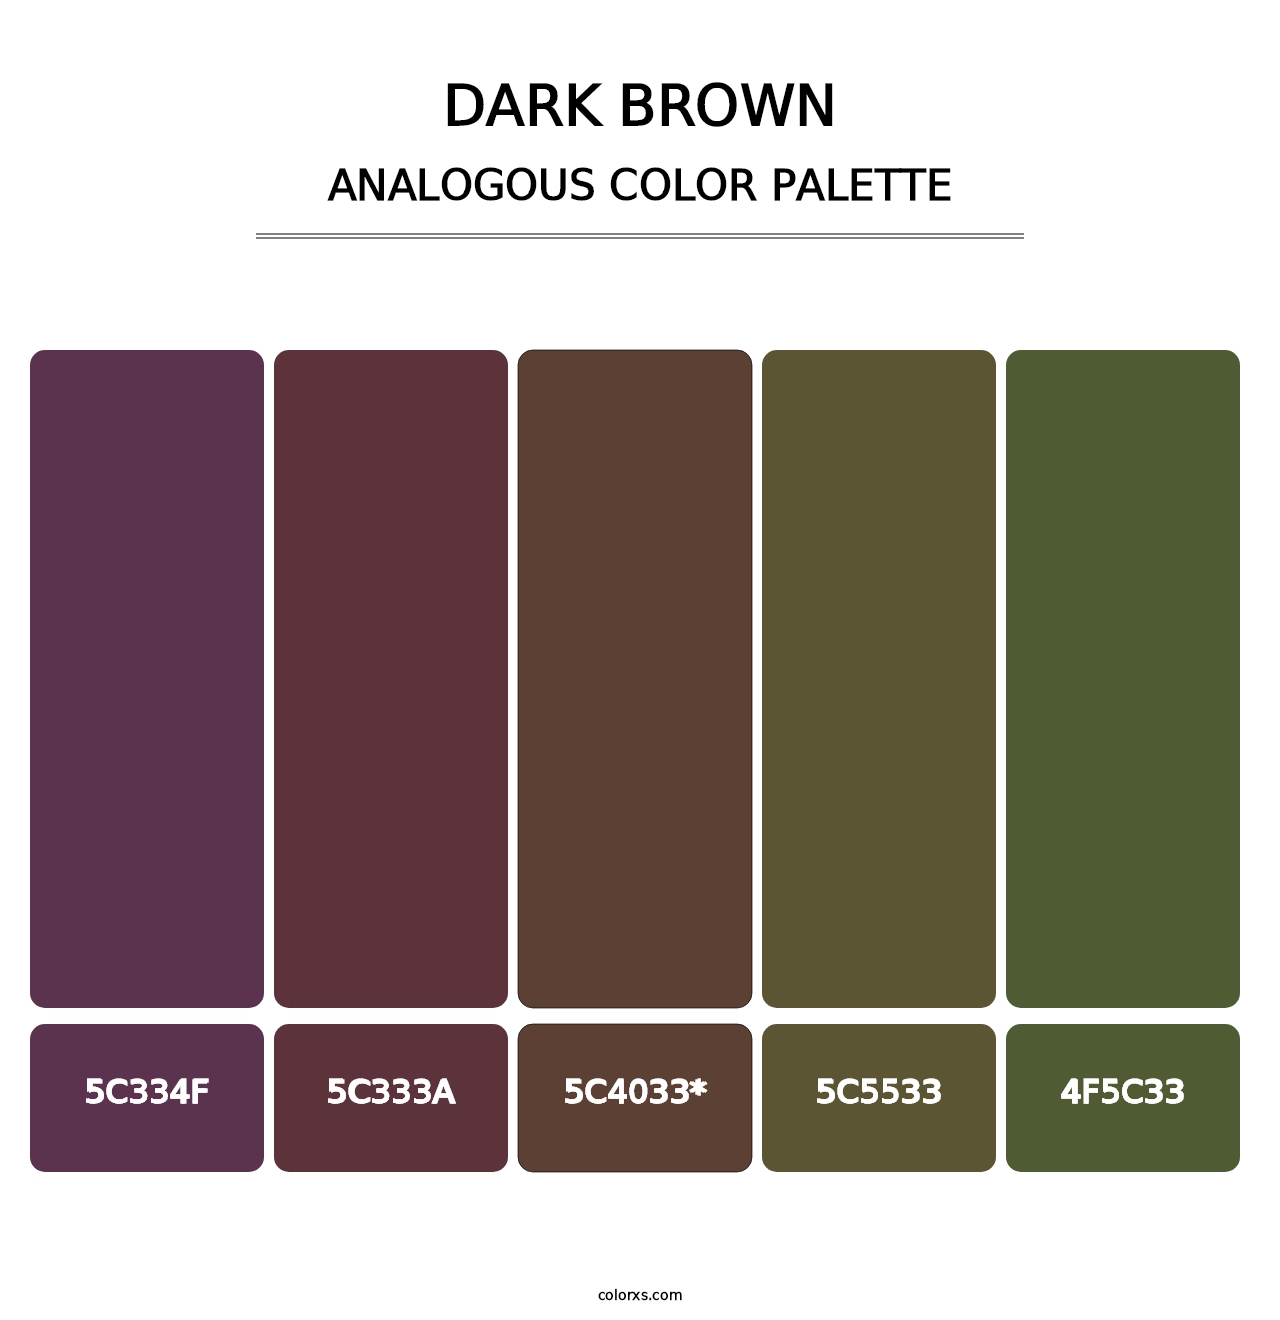 Dark Brown - Analogous Color Palette